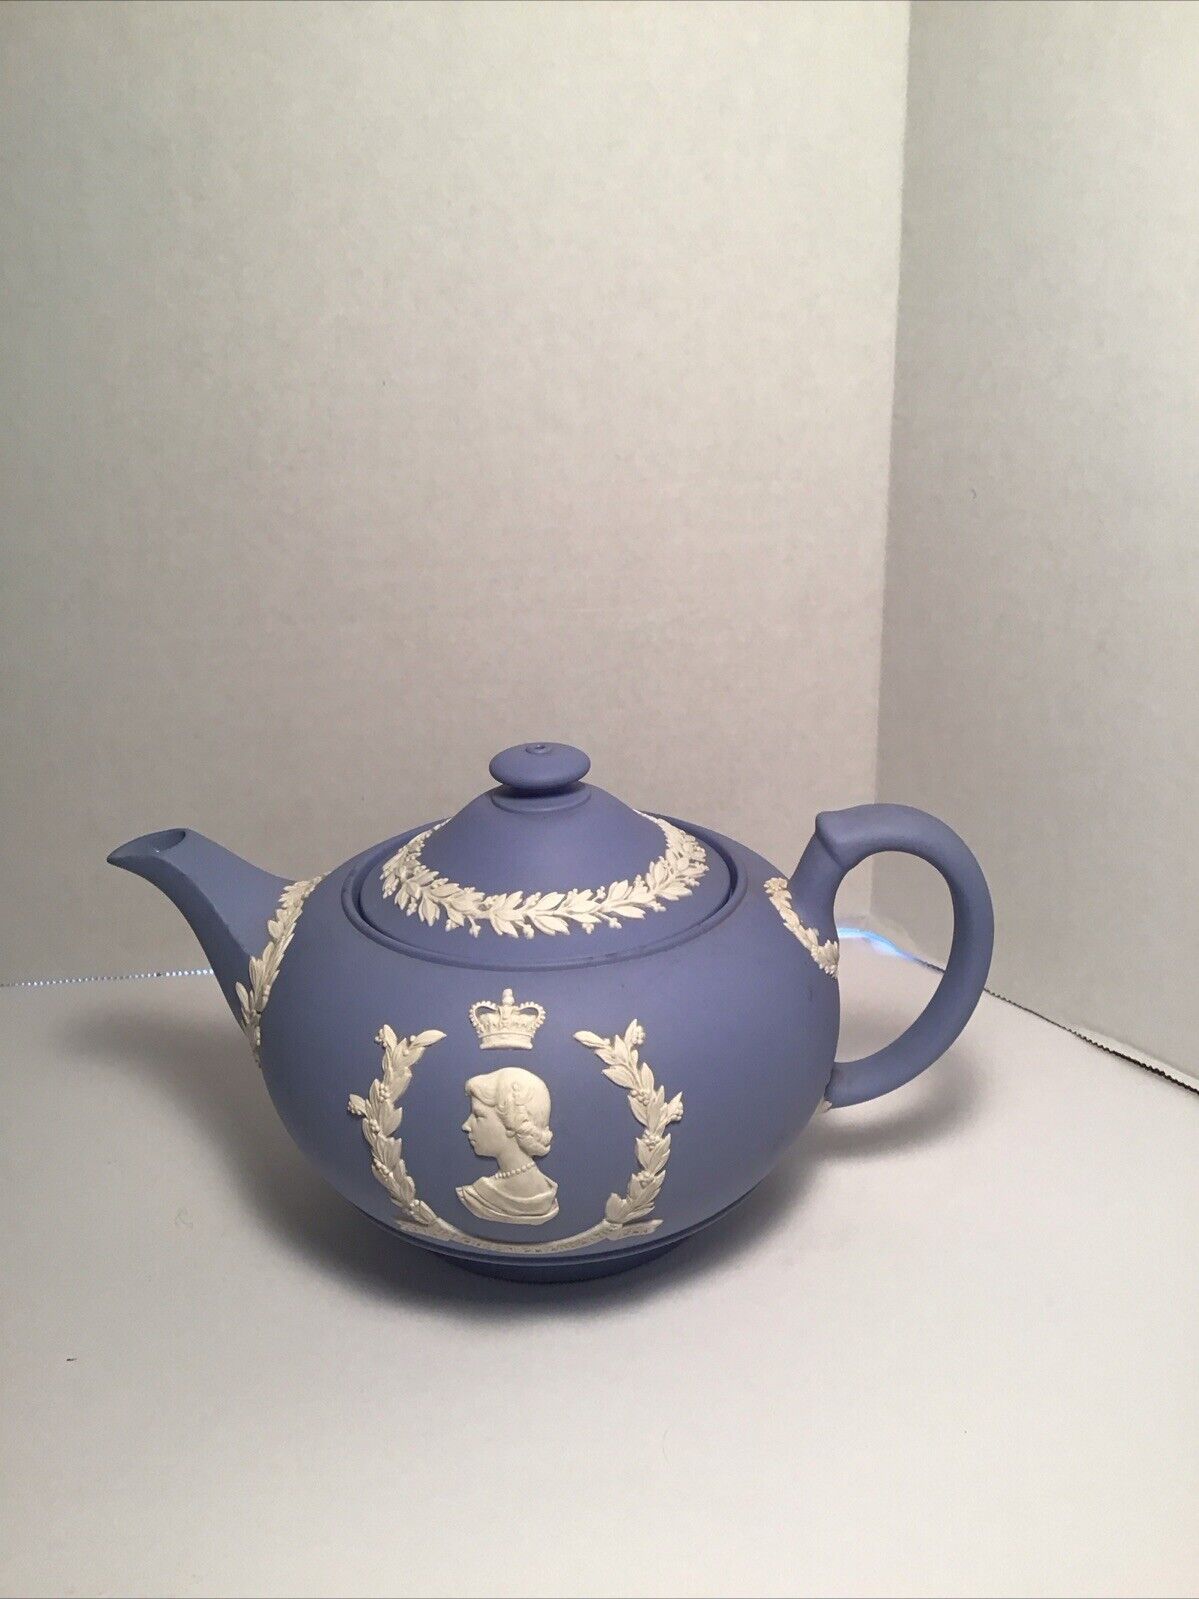 Vintage Wedgwood Teapot, Pale Blue Jasper Ware, 1953 Coronation